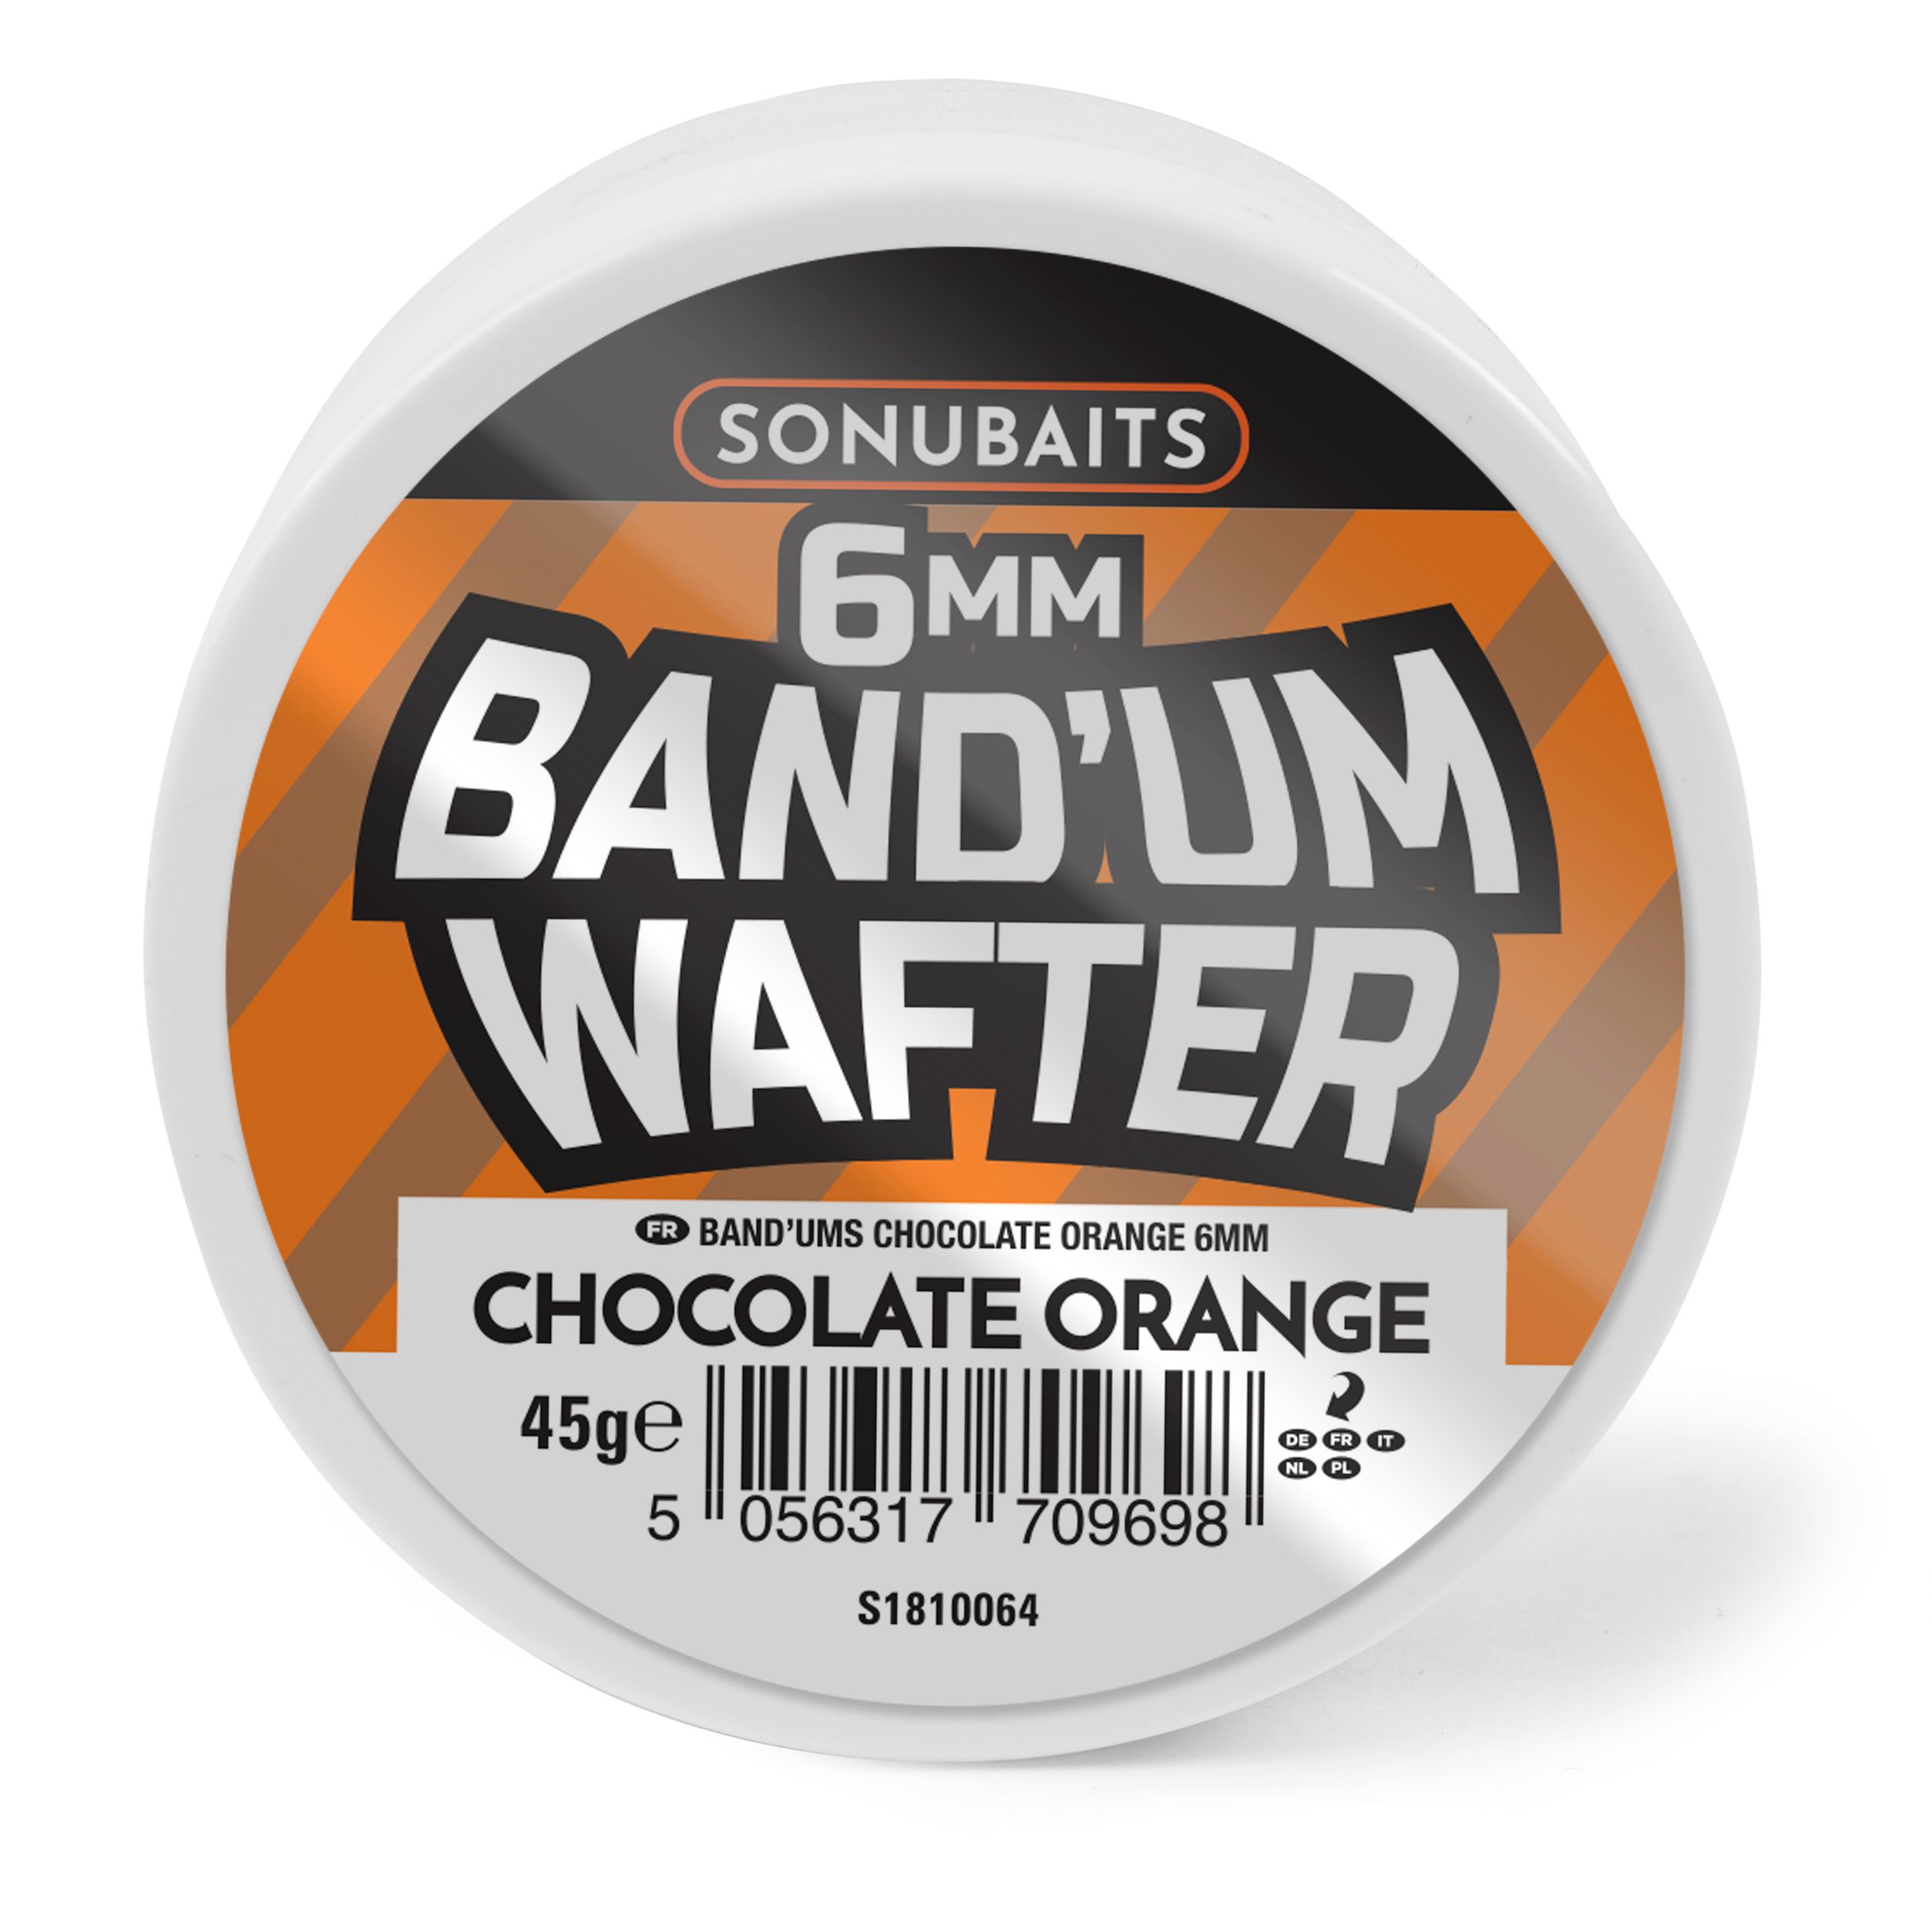 Sonubaits Band'um Wafters Chocolate Orange 6mm